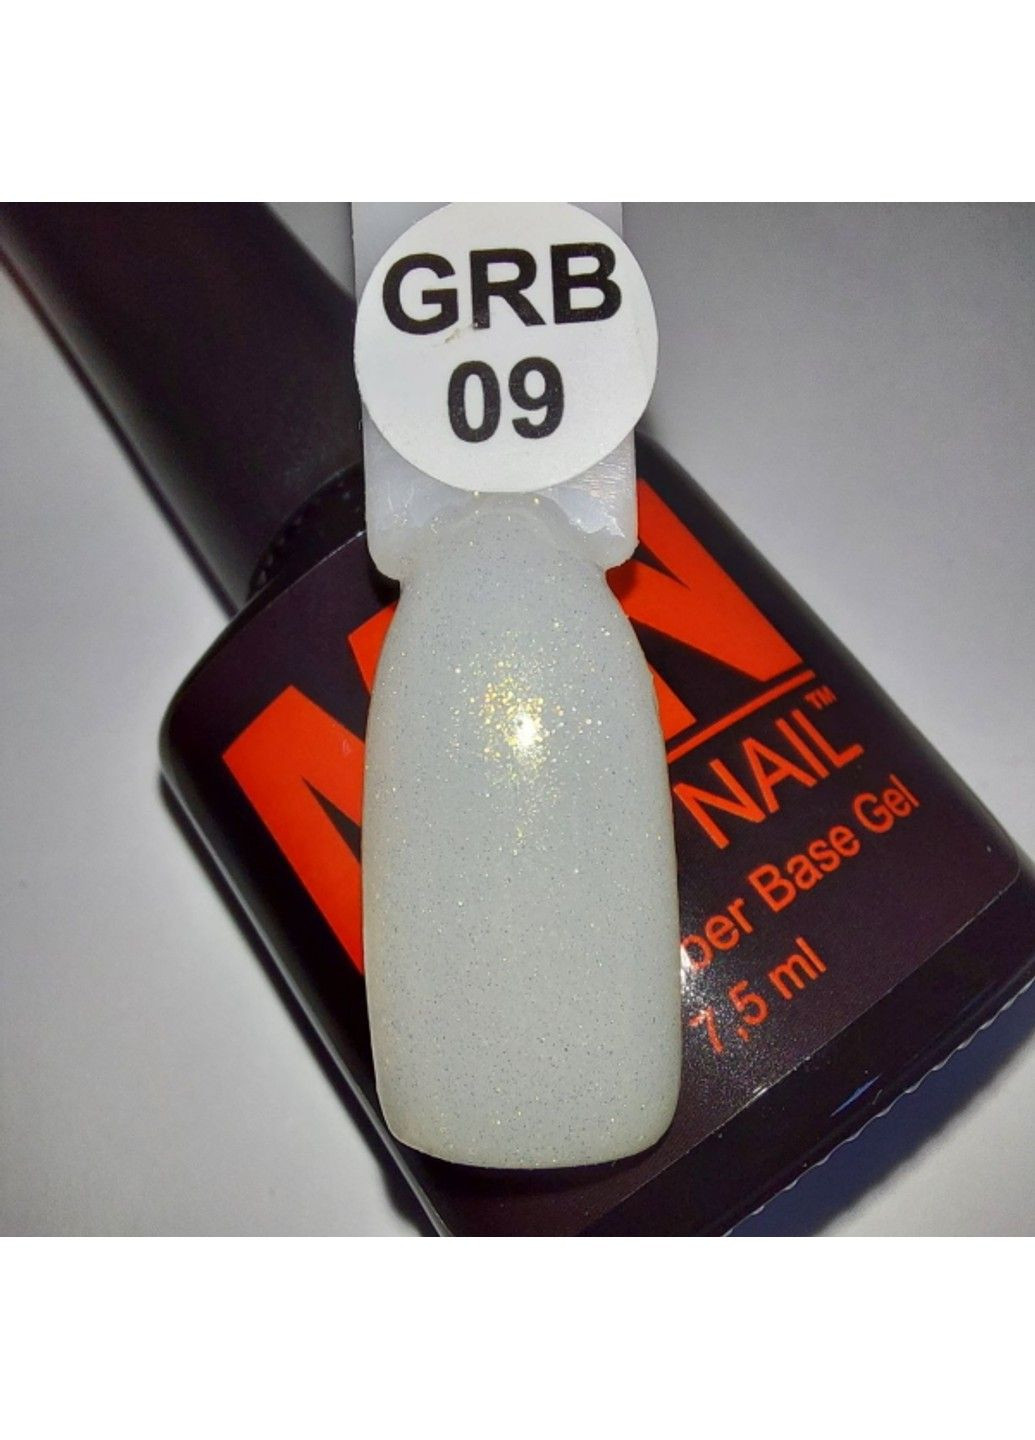 Glitter Rubber Base MagicNail (292146060)